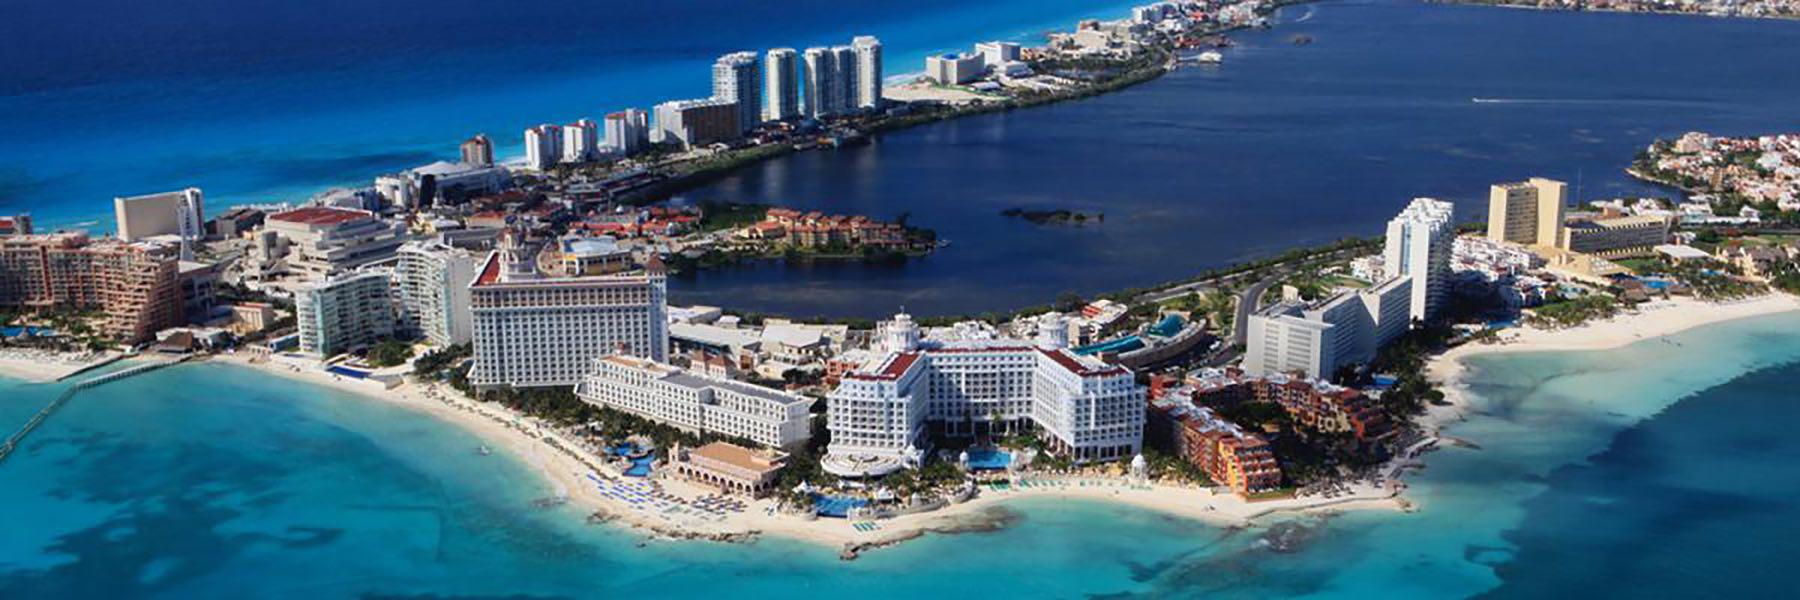 Header_Cancun_Beach_hotel_2_1800